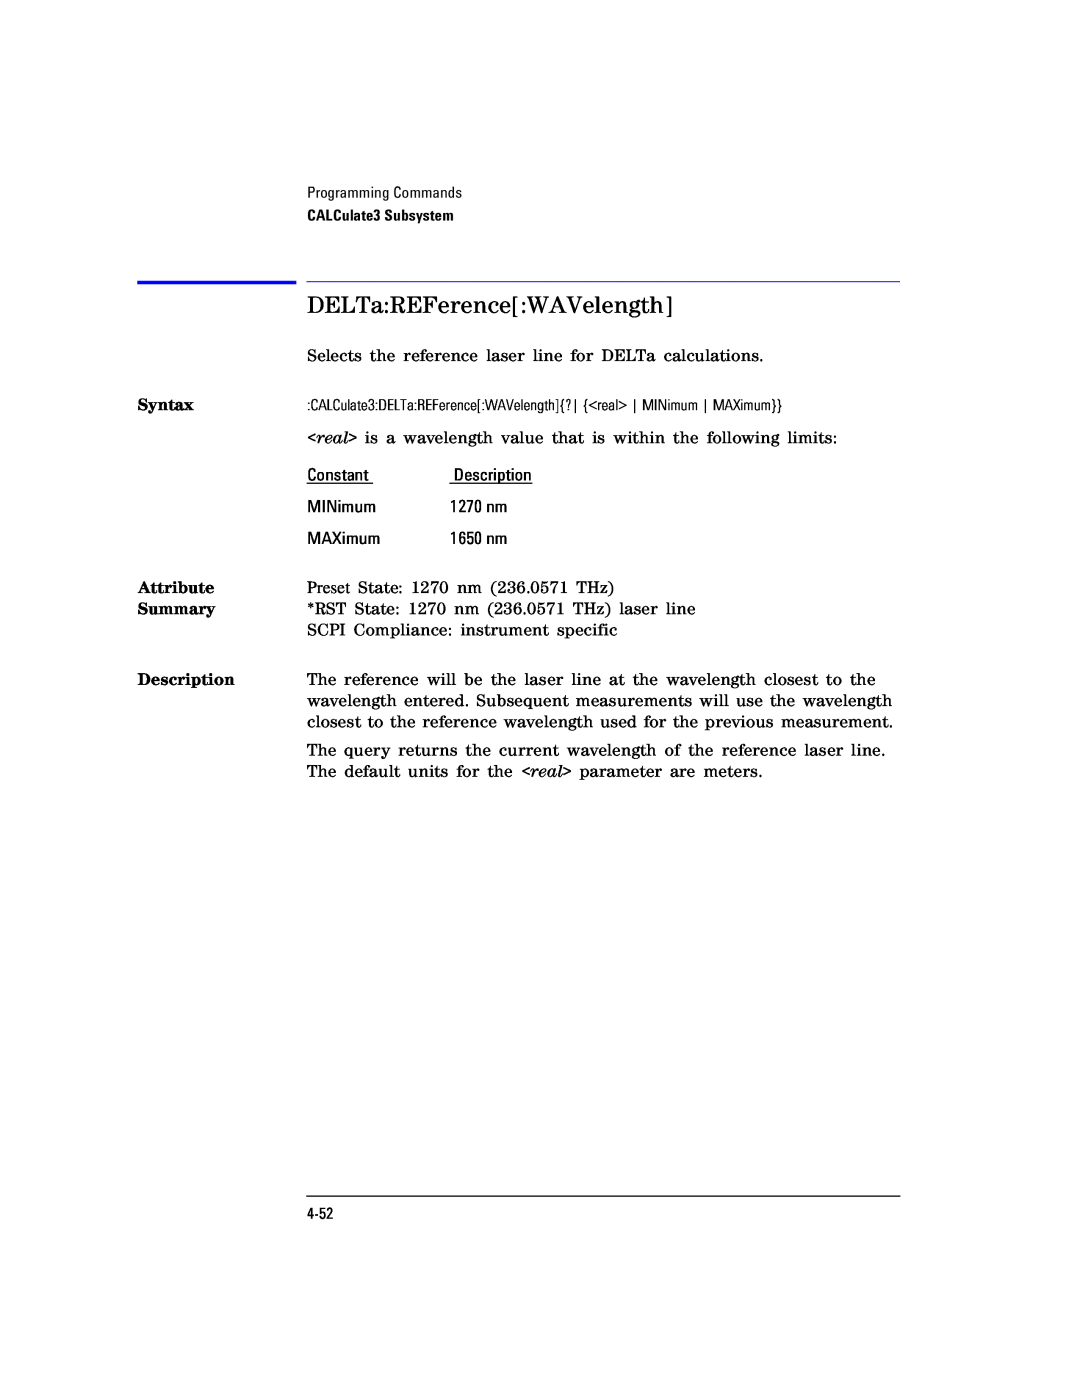 Agilent Technologies Agilent 86120C manual DELTaREFerenceWAVelength, Syntax, Attribute, Summary, Description 